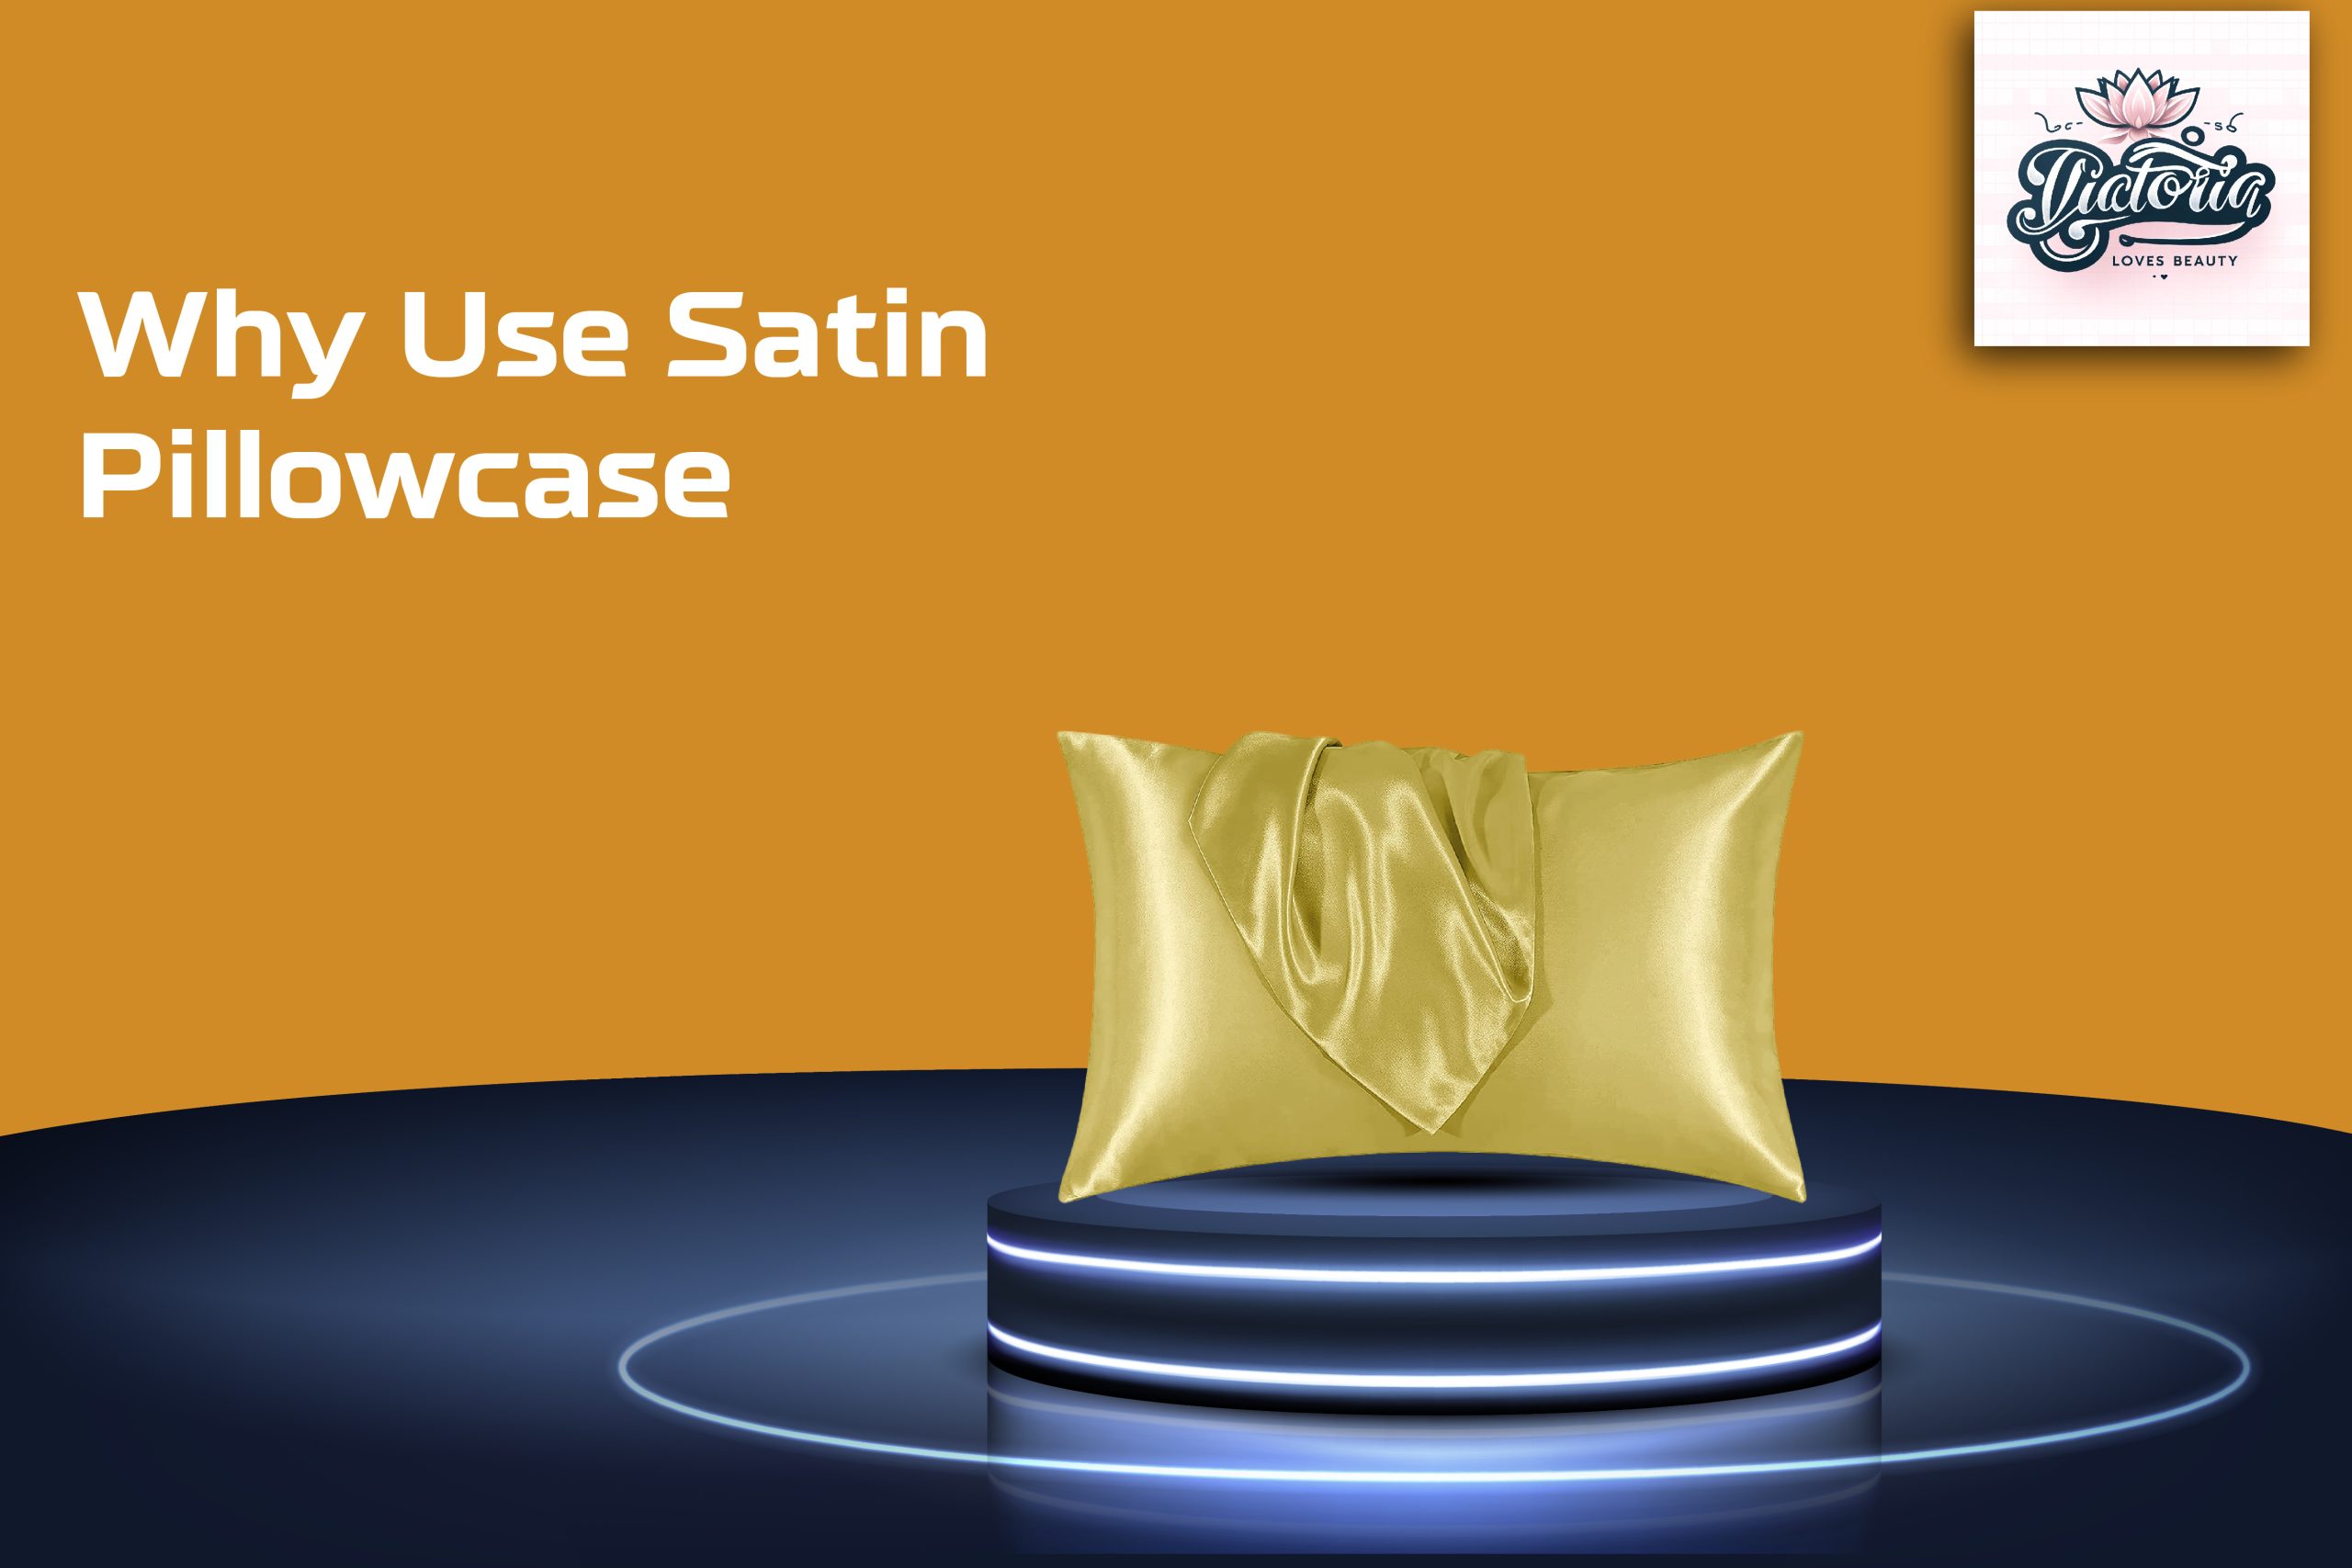 Why Use Satin Pillowcase